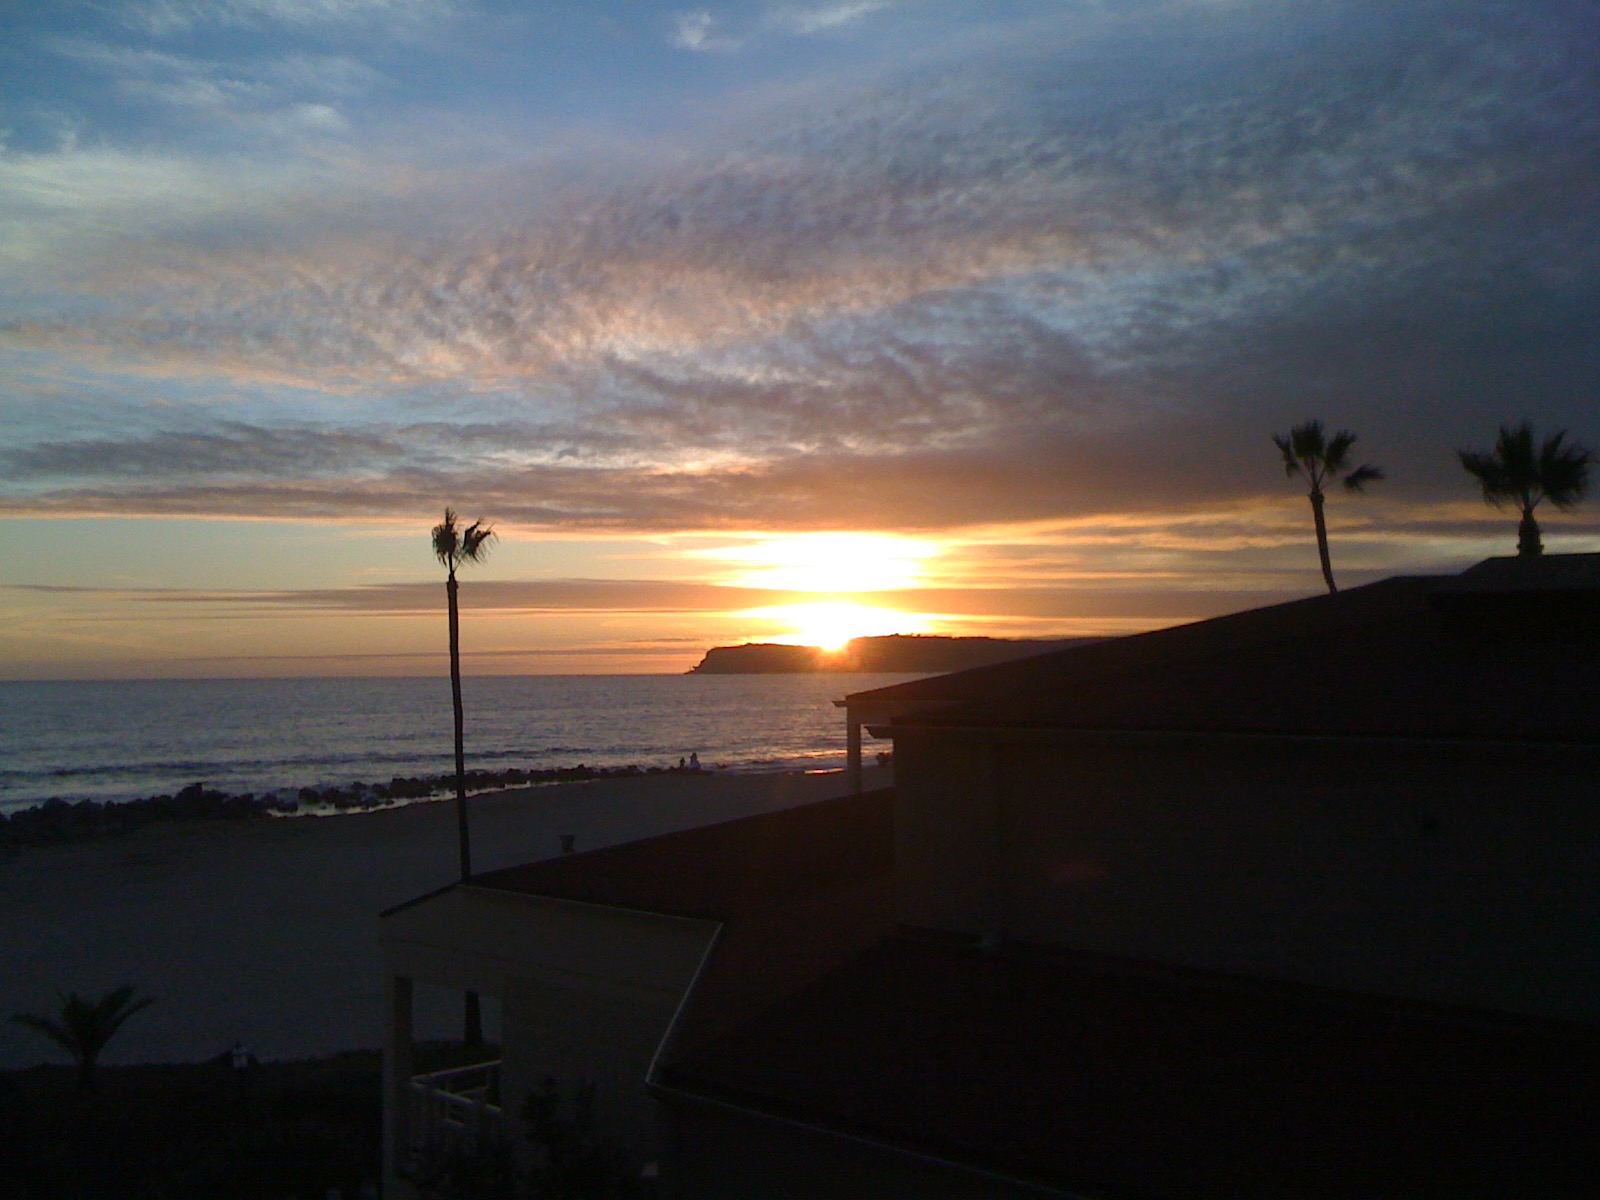 Sunset at Hotel del Coronado in San Diego, CA (Photo Credit: Adroit Ideals)